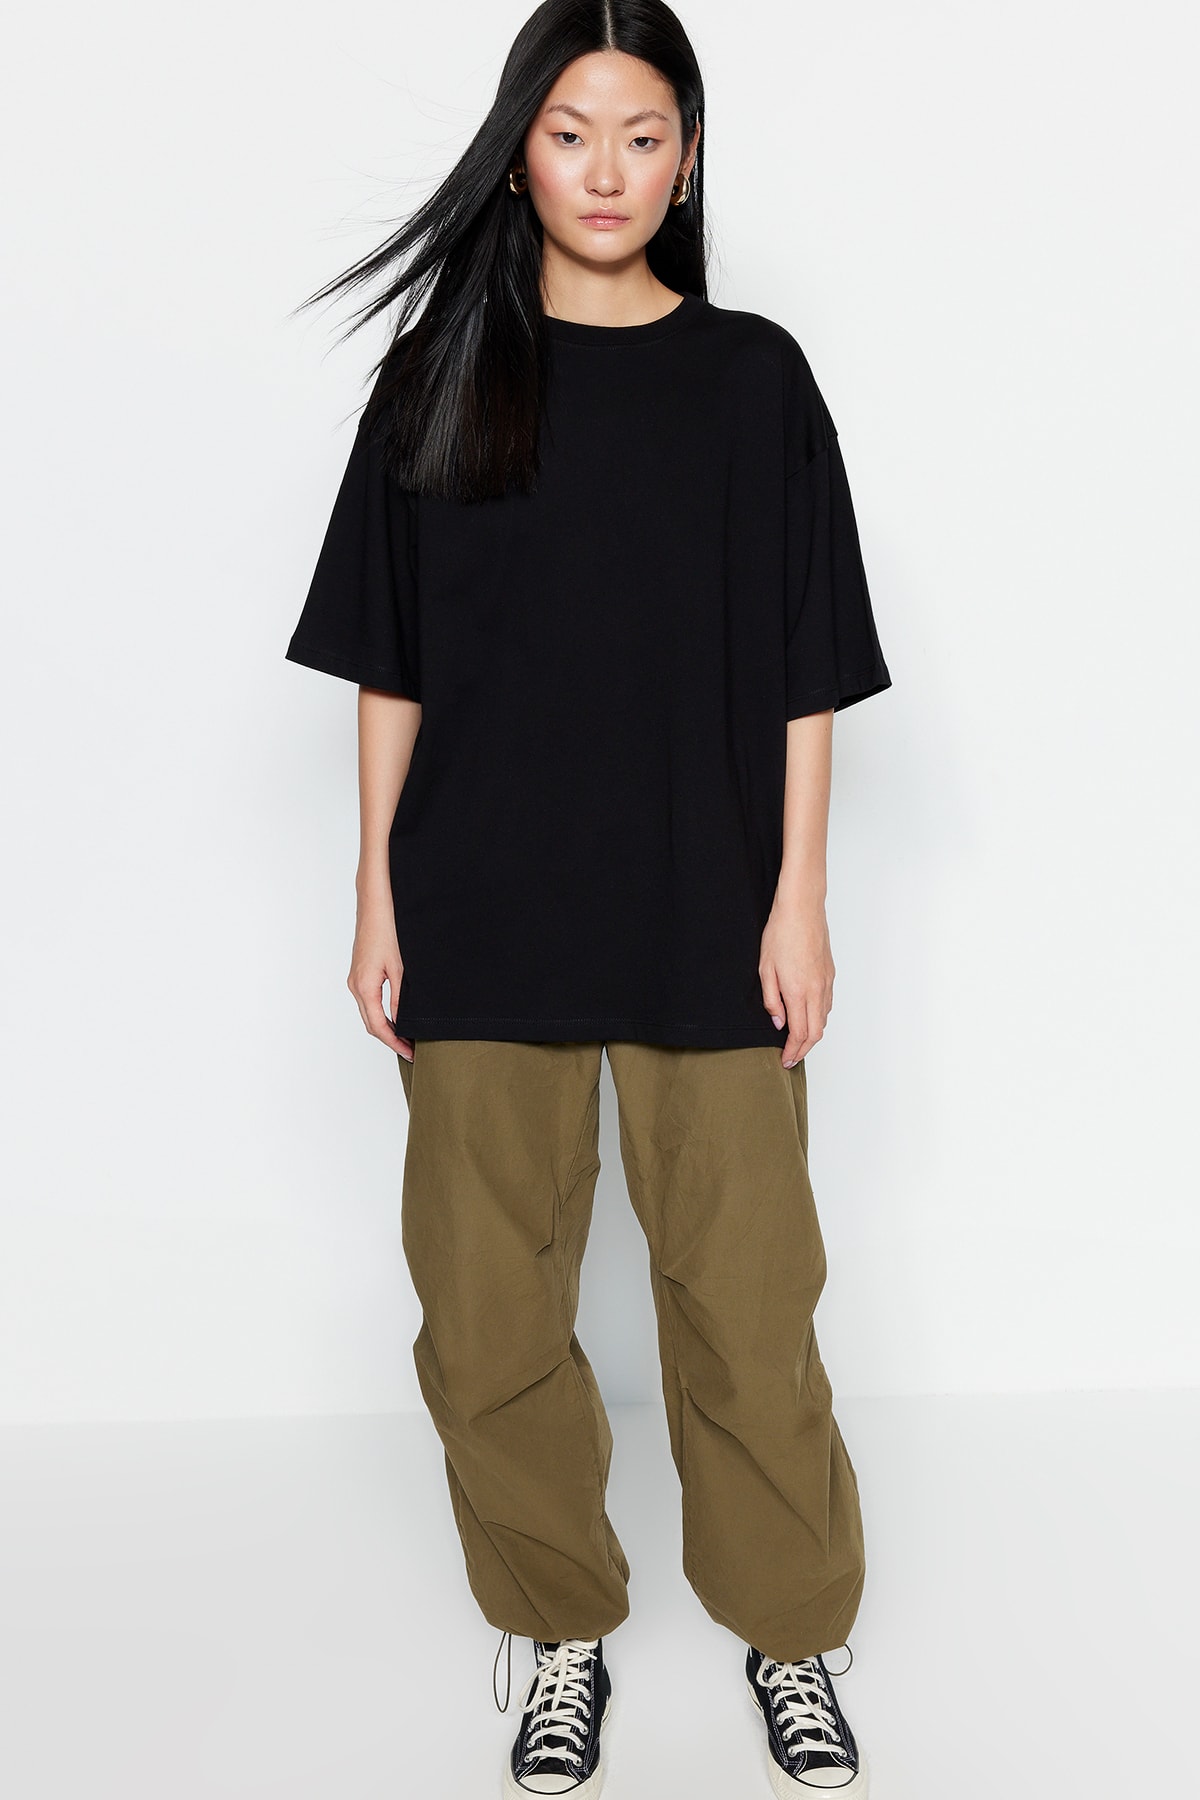 Trendyol Black 100% Cotton Premium Oversize/Wide Fit Crew Neck Knitted T-Shirt